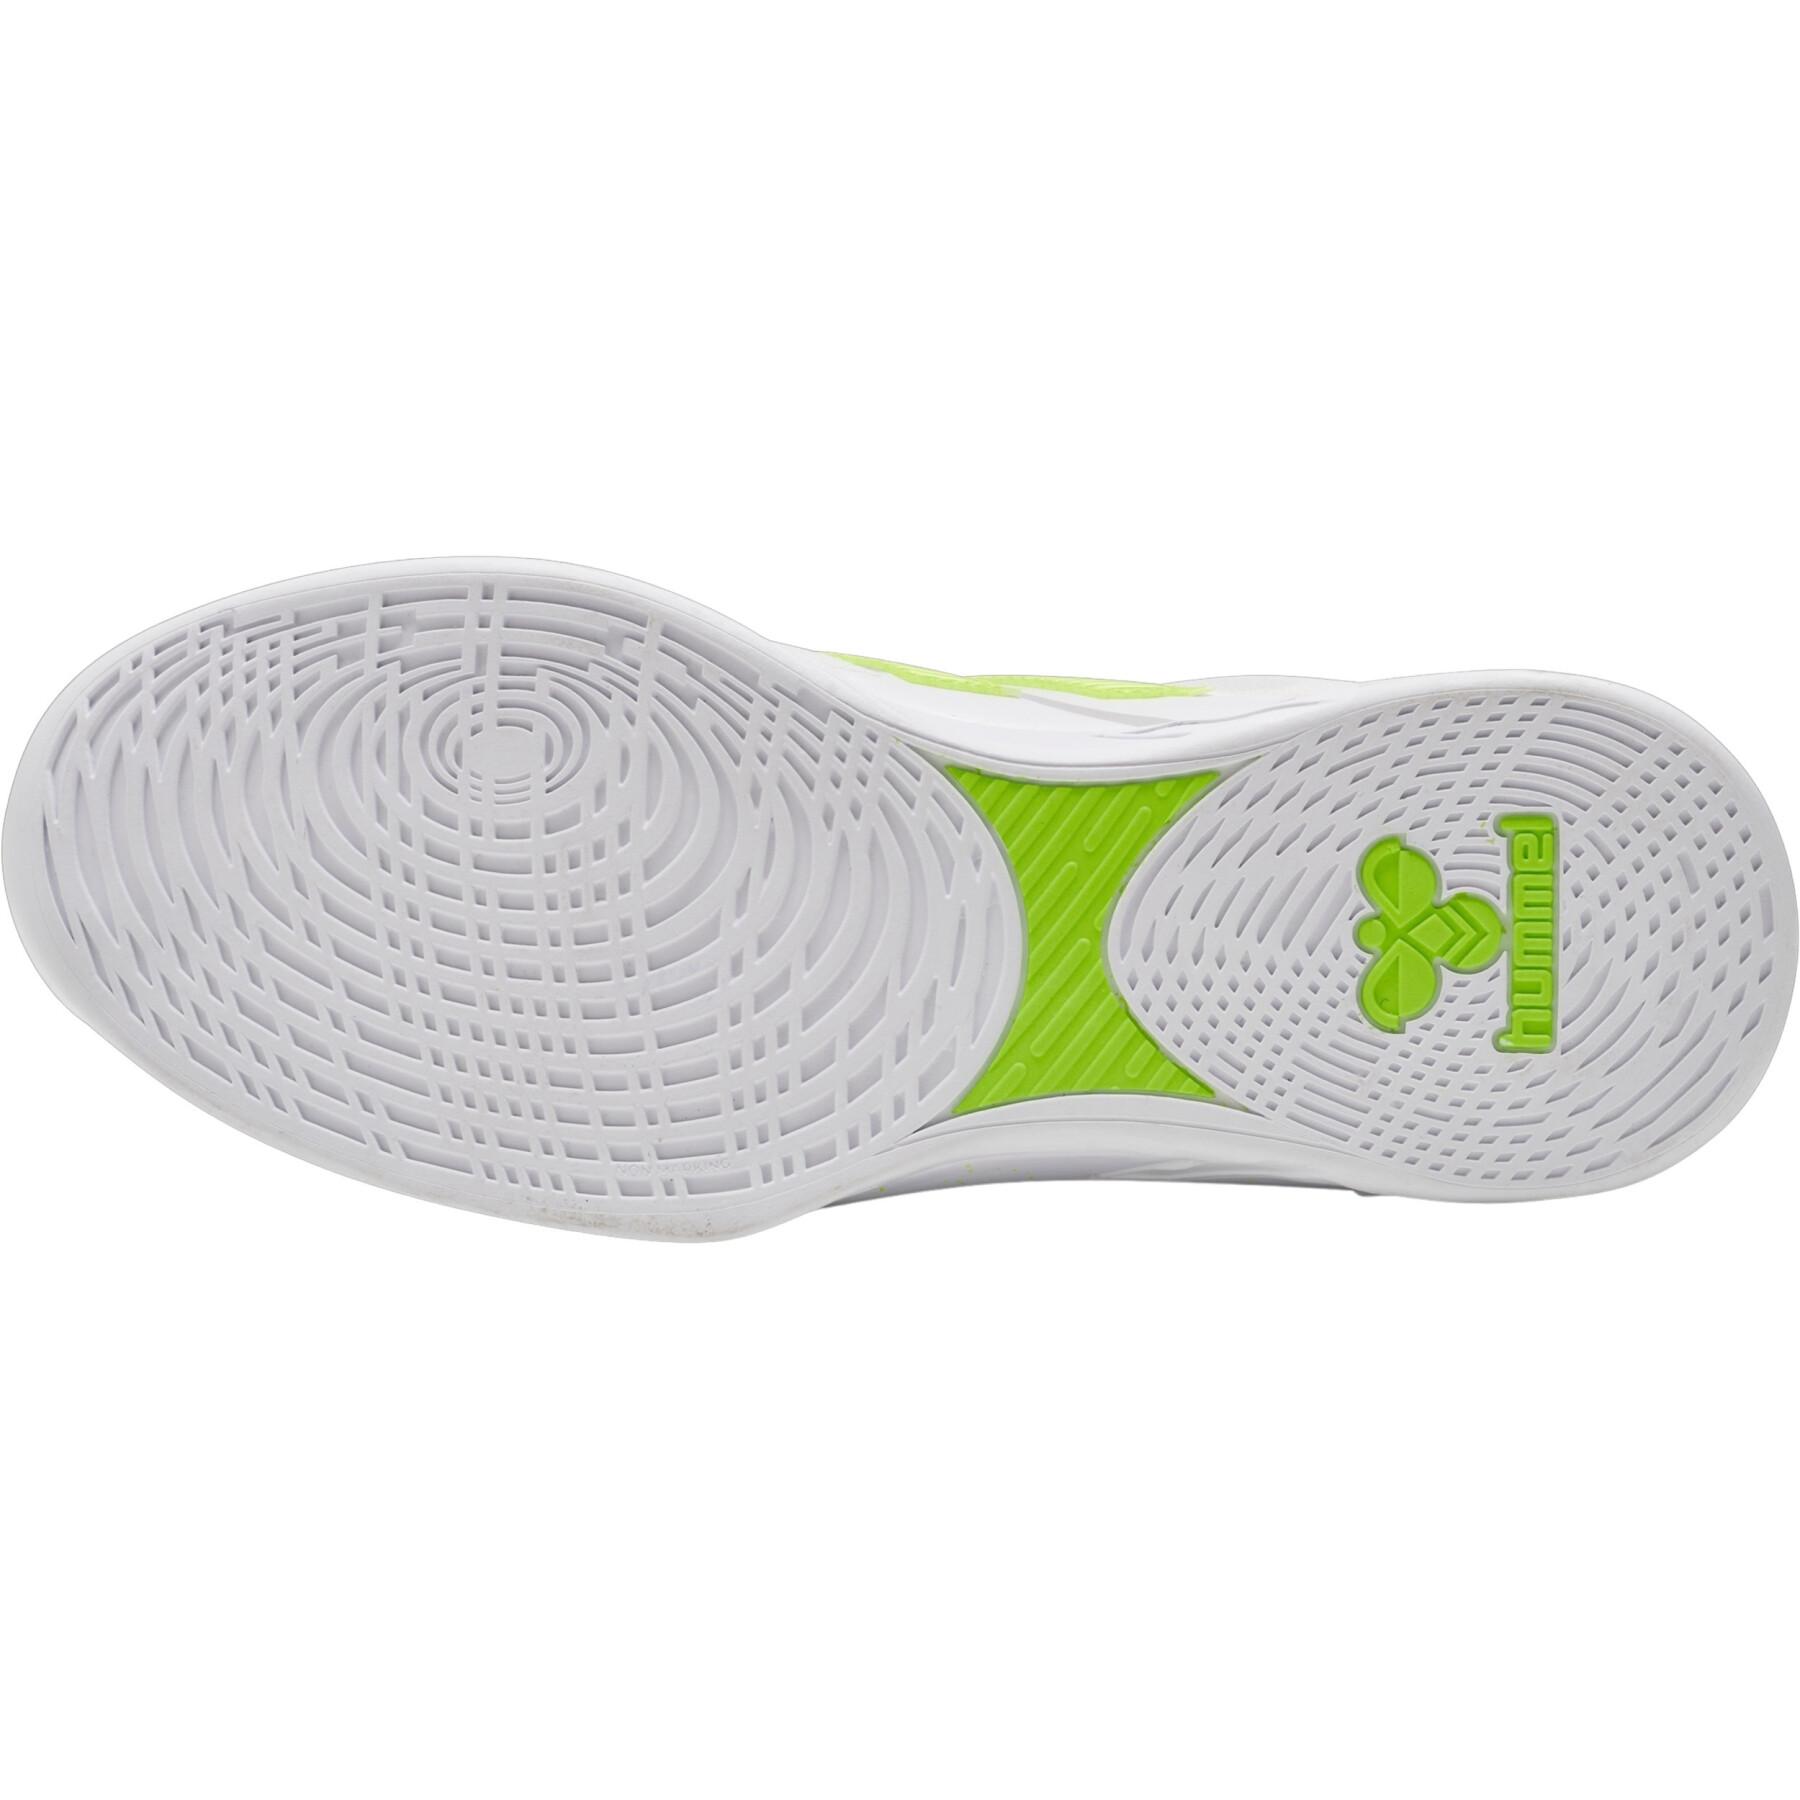 Handball shoes Hummel Uruz 2.0